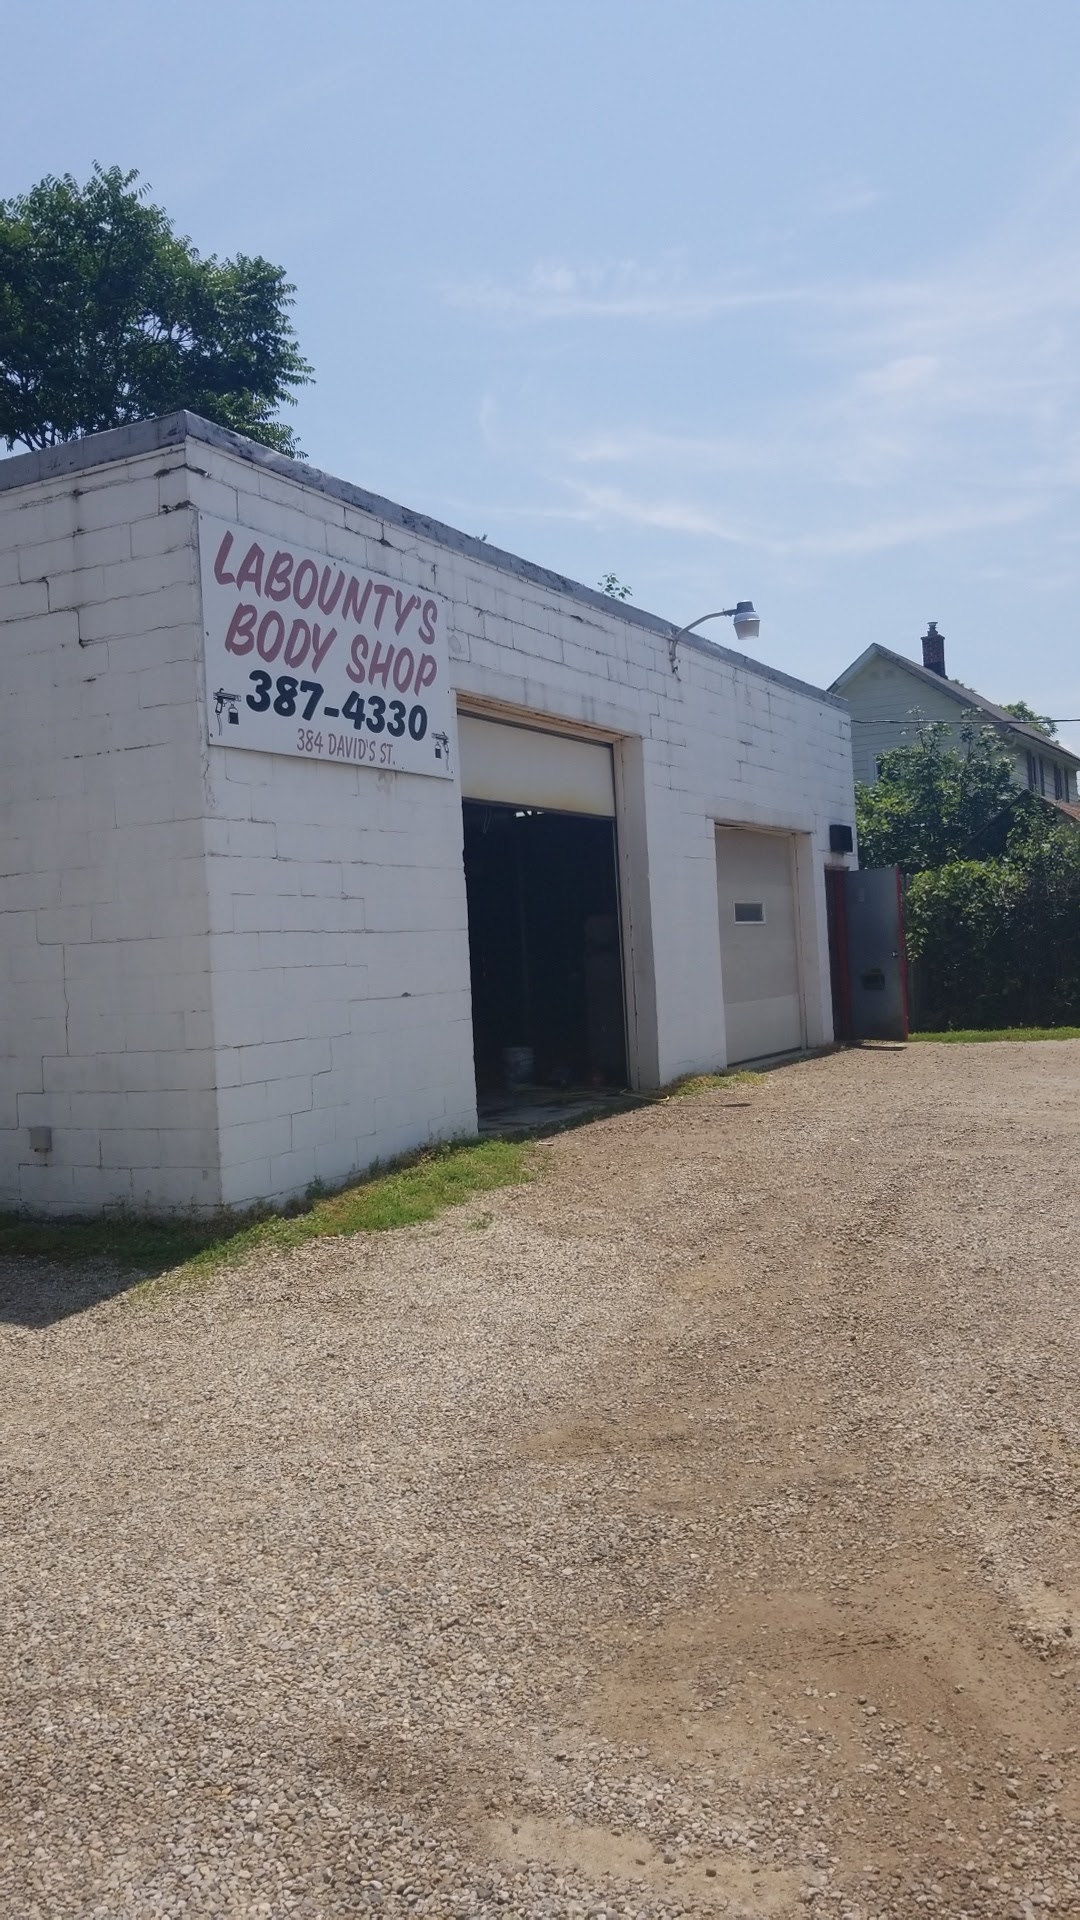 Labounty's Body Shop